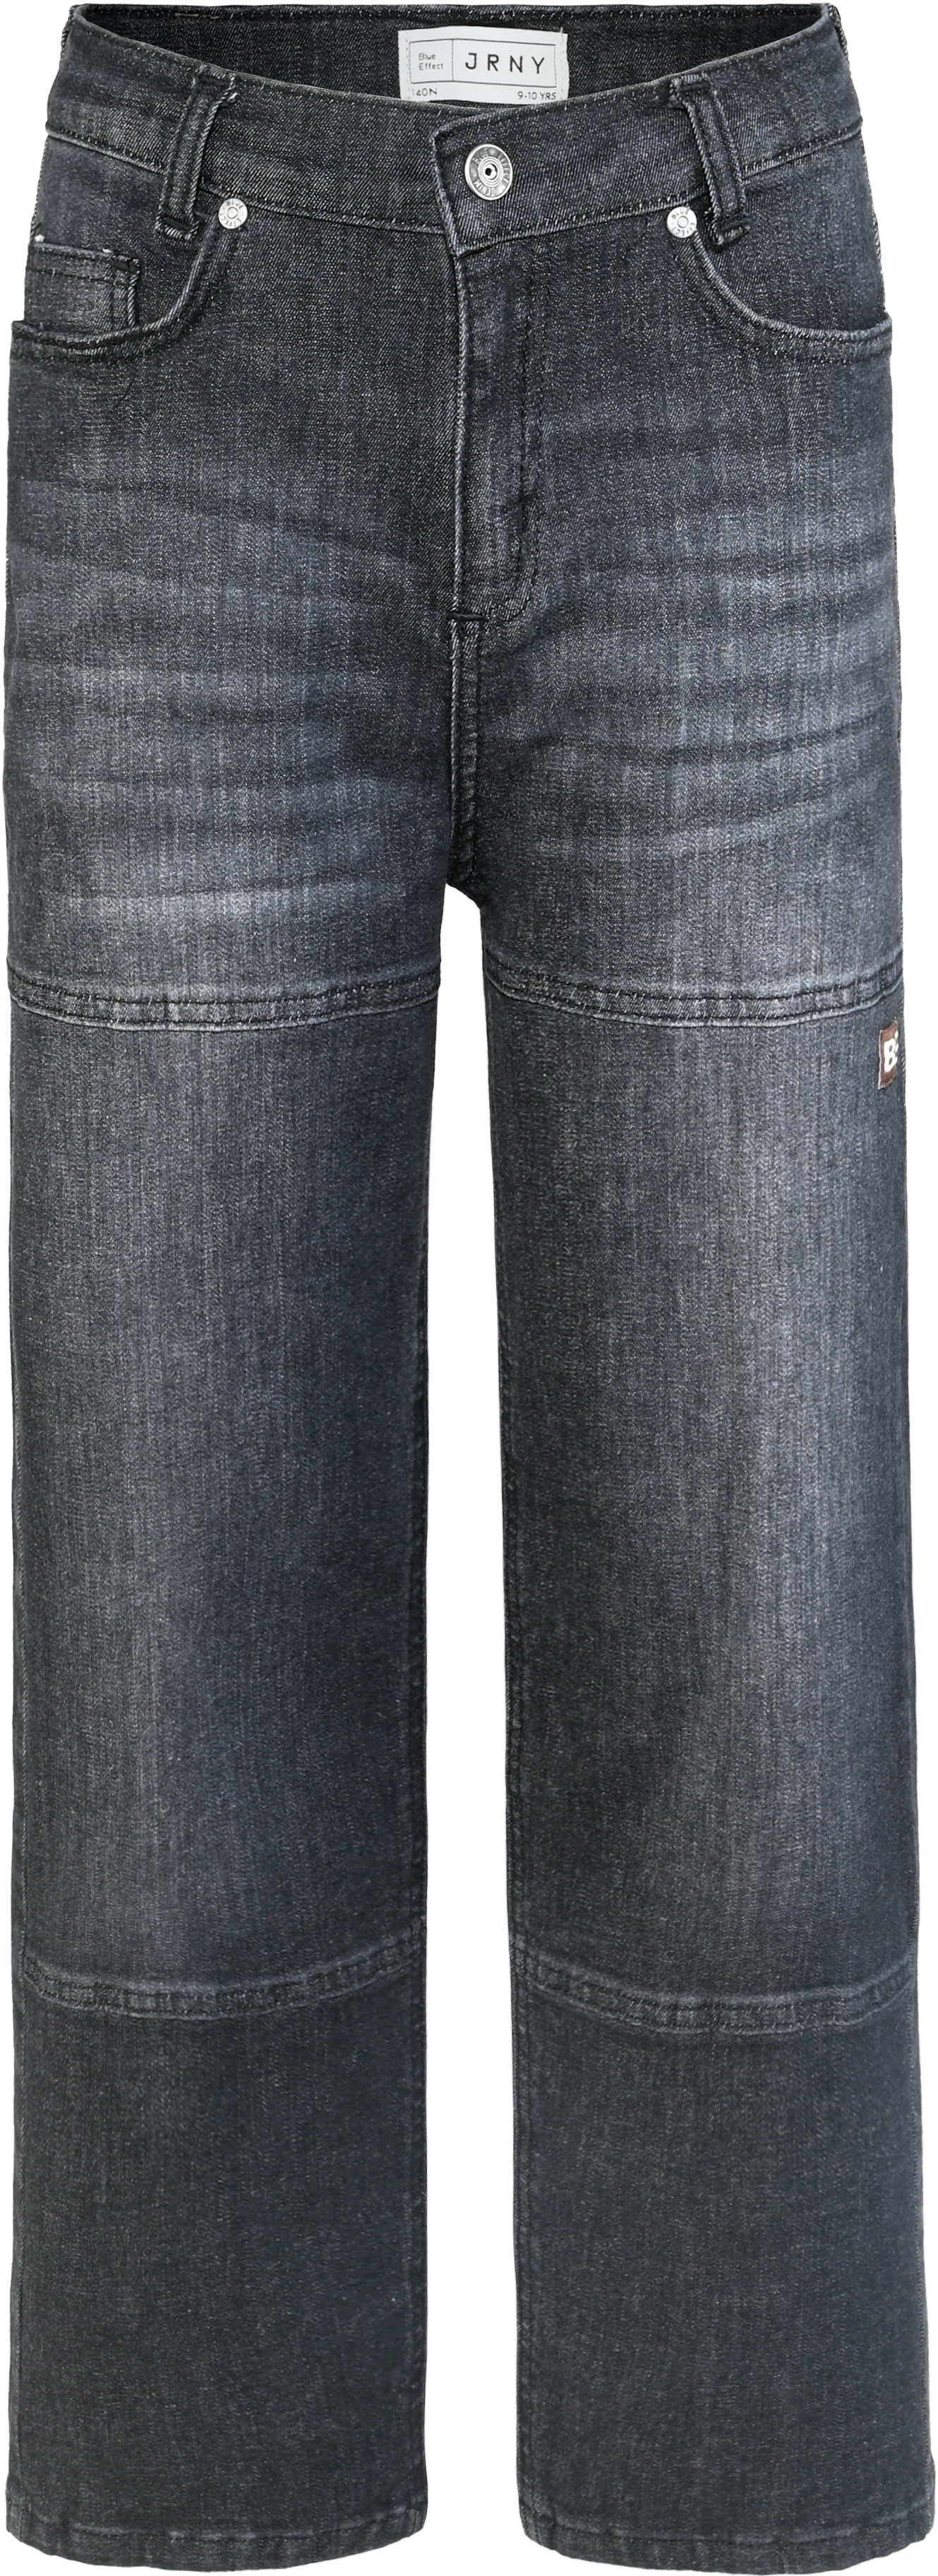 2858-Boys Super Baggy Jeans verfügbar in Normal